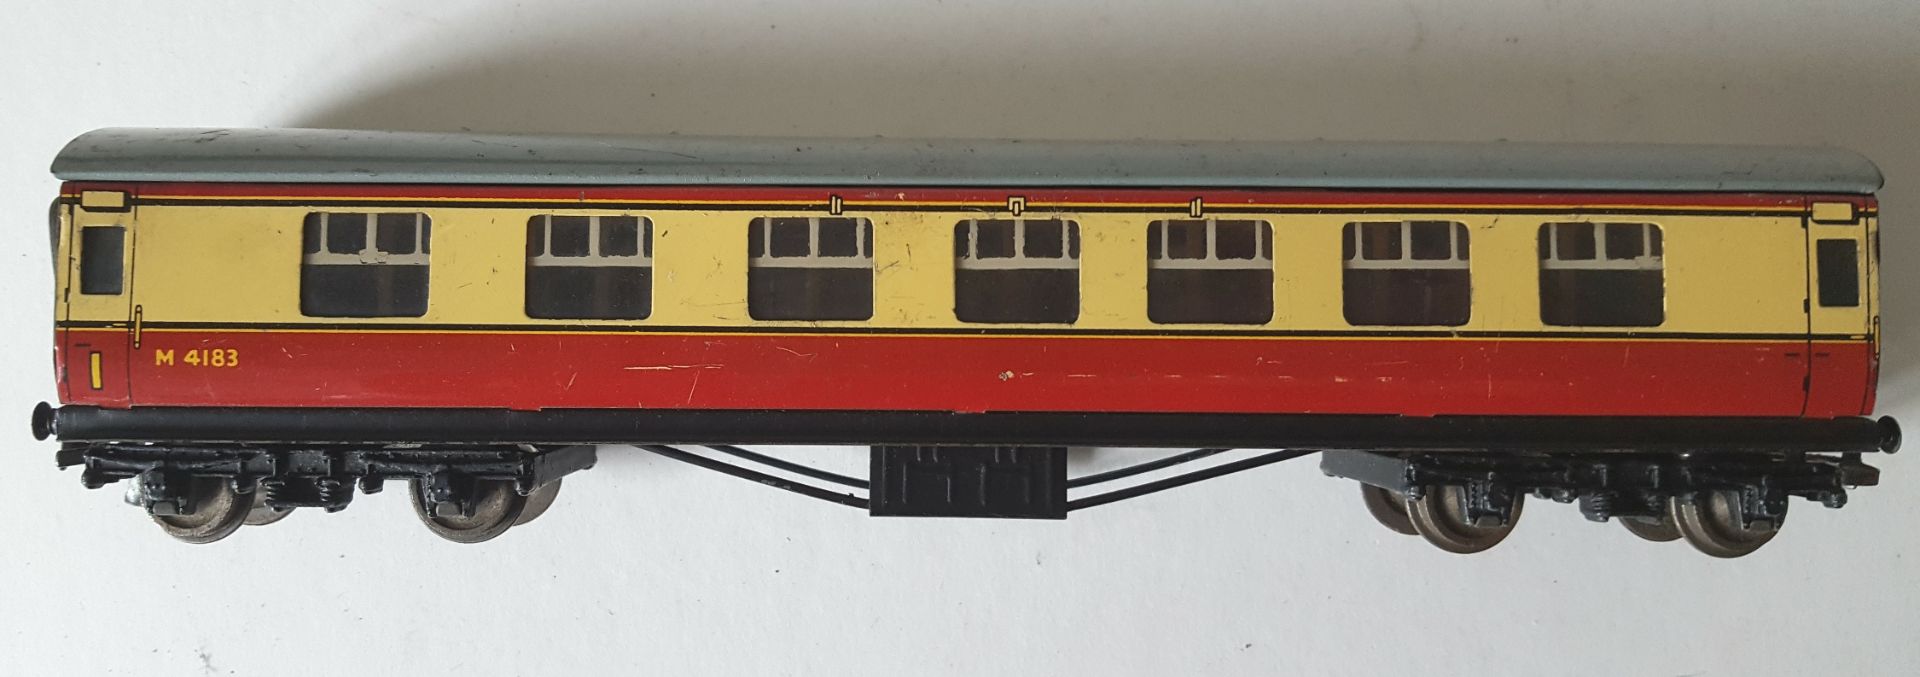 Vintage Retro 2 x Tin Plate Model Train Coaches 00 Gauge Hornby Dublo Meccano - Image 4 of 4